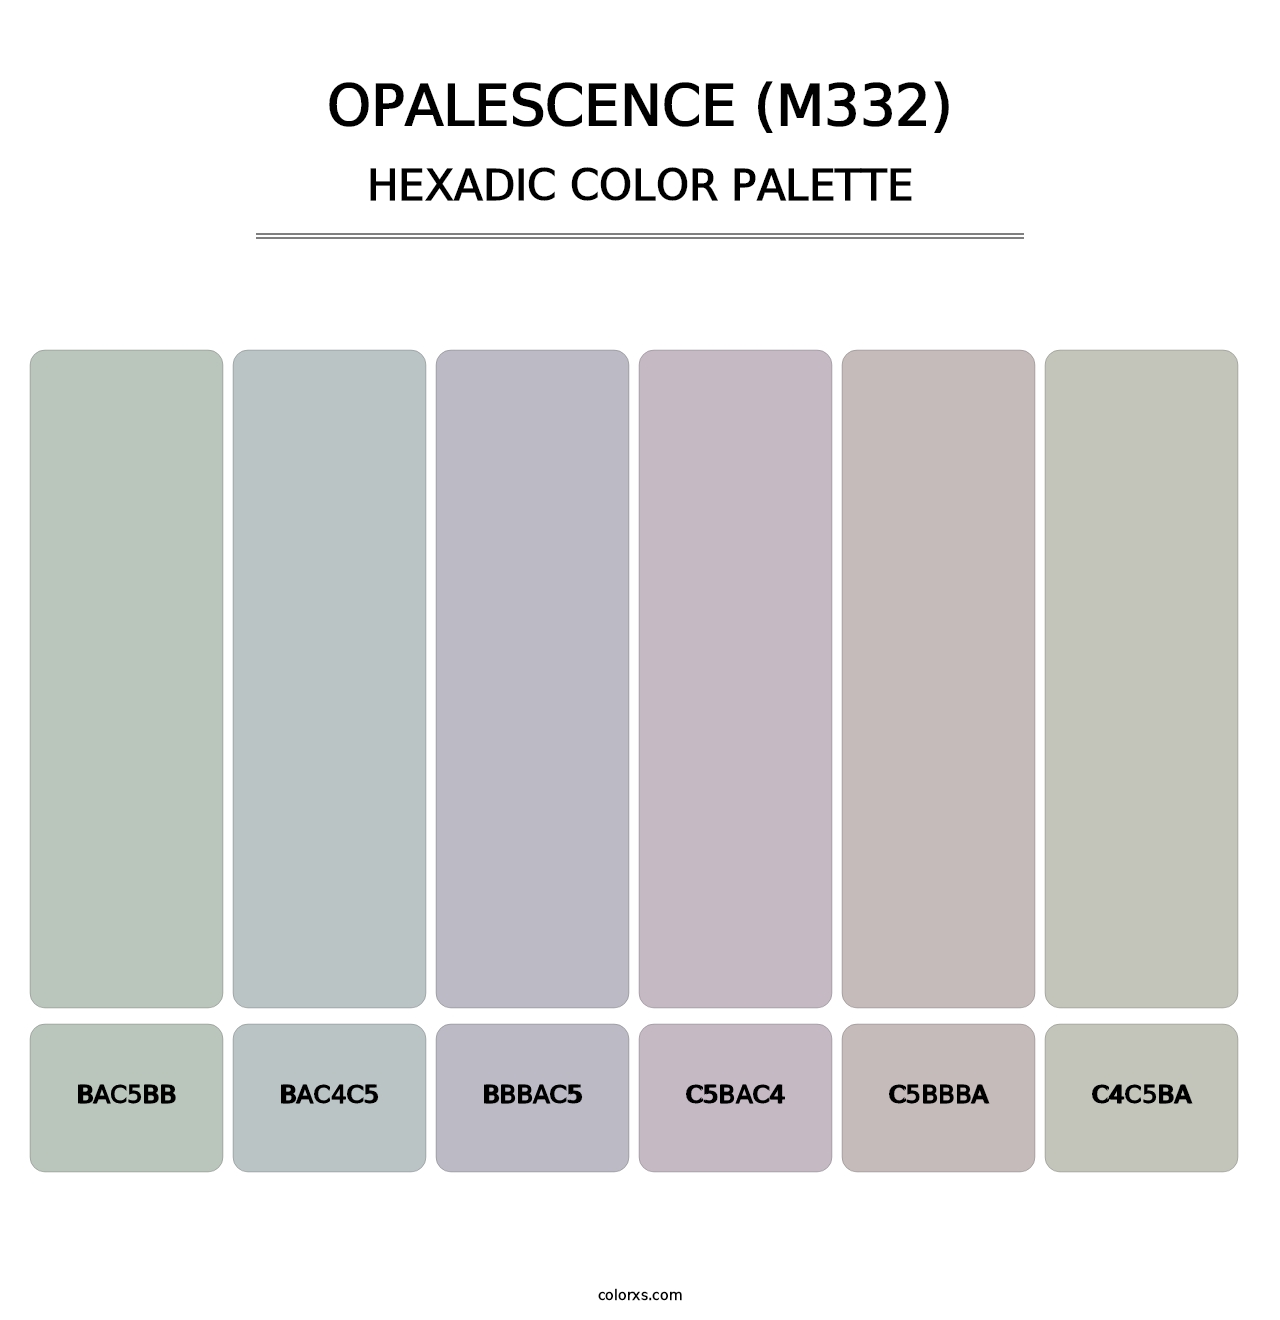 Opalescence (M332) - Hexadic Color Palette